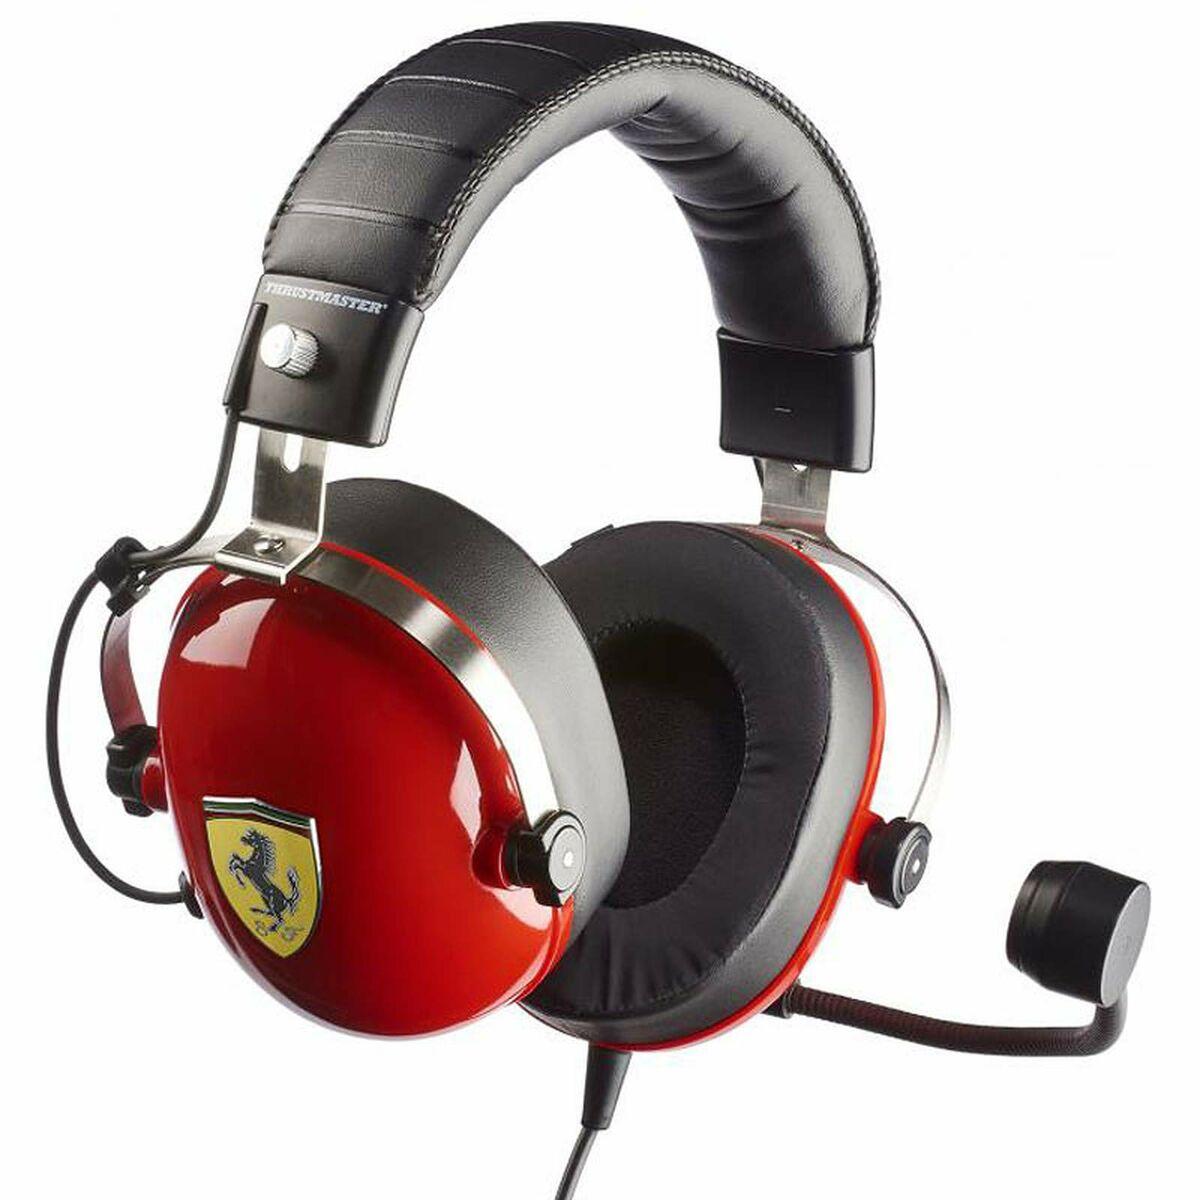 Se ThrustMaster T.Racing Scuderia Headset hos Boligcenter.dk